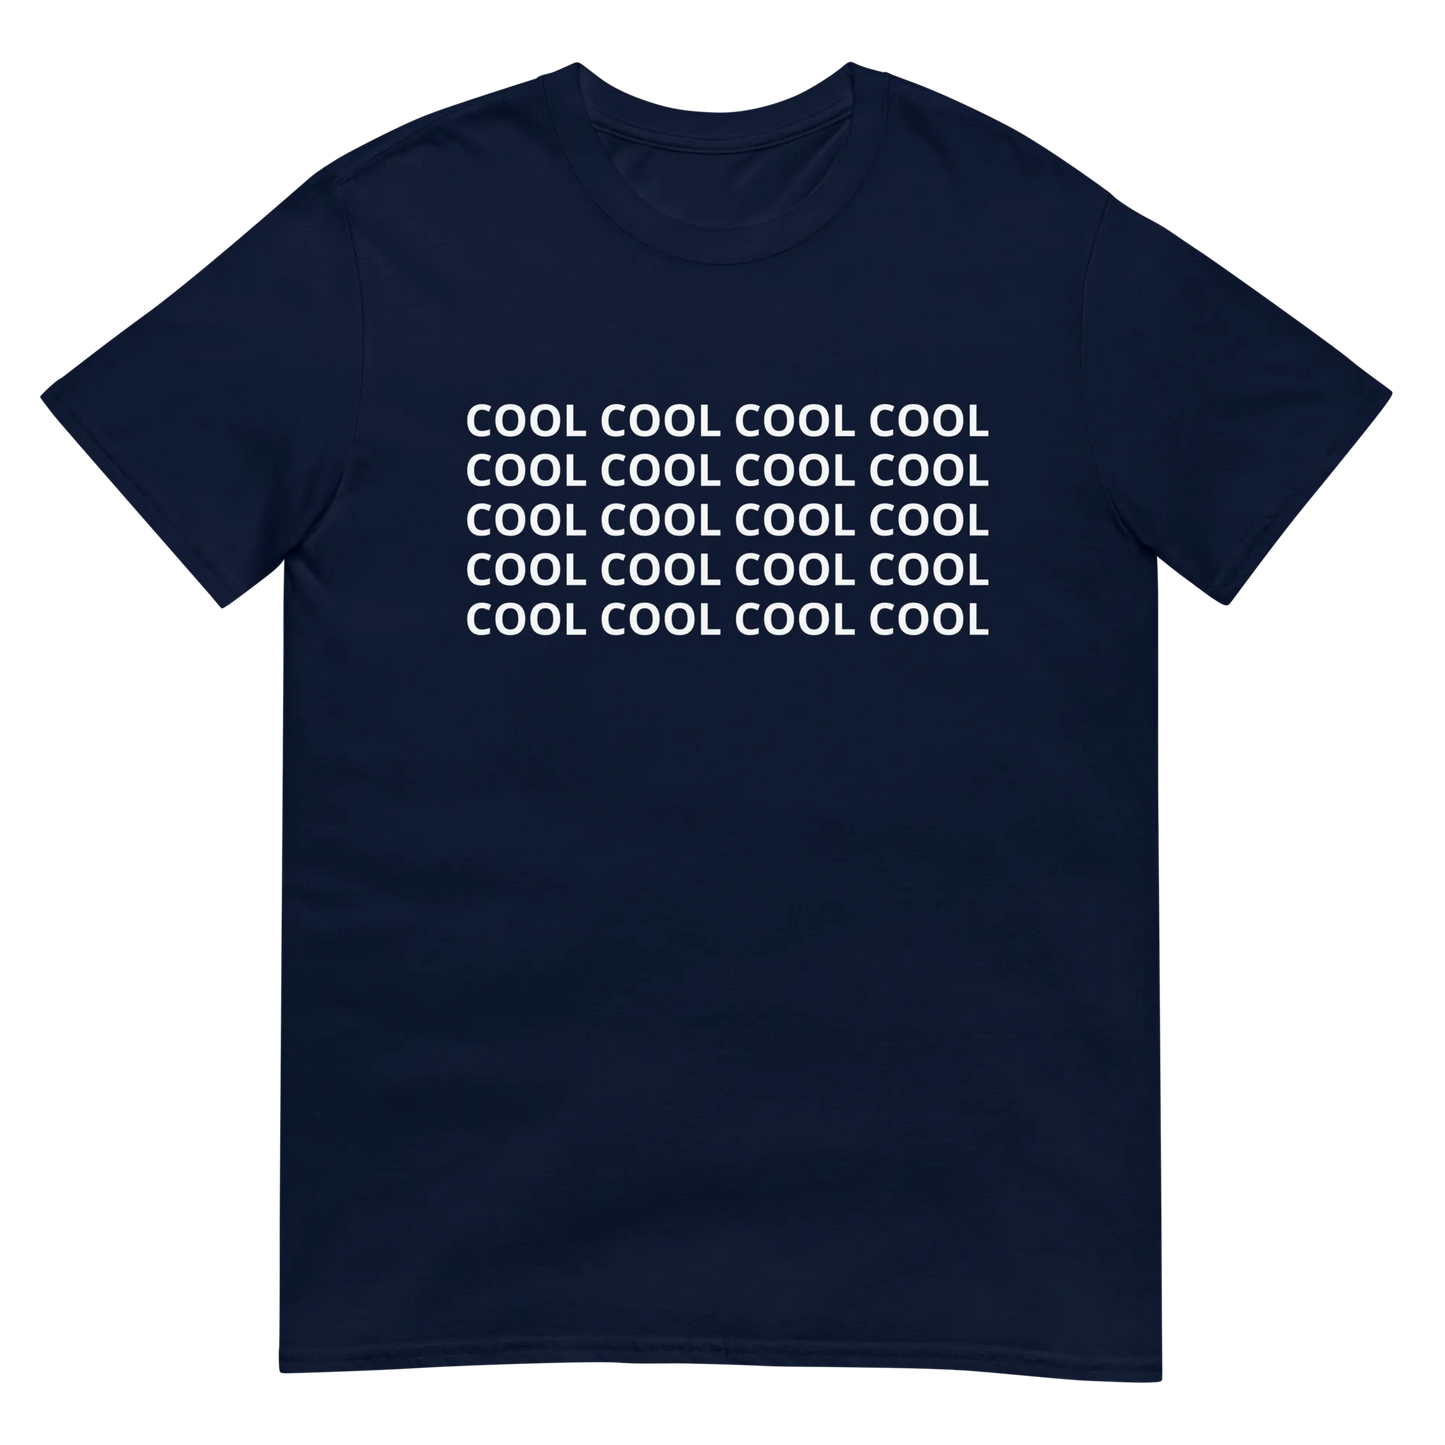 Cool Cool Cool Cool Tee in Navy flatlay